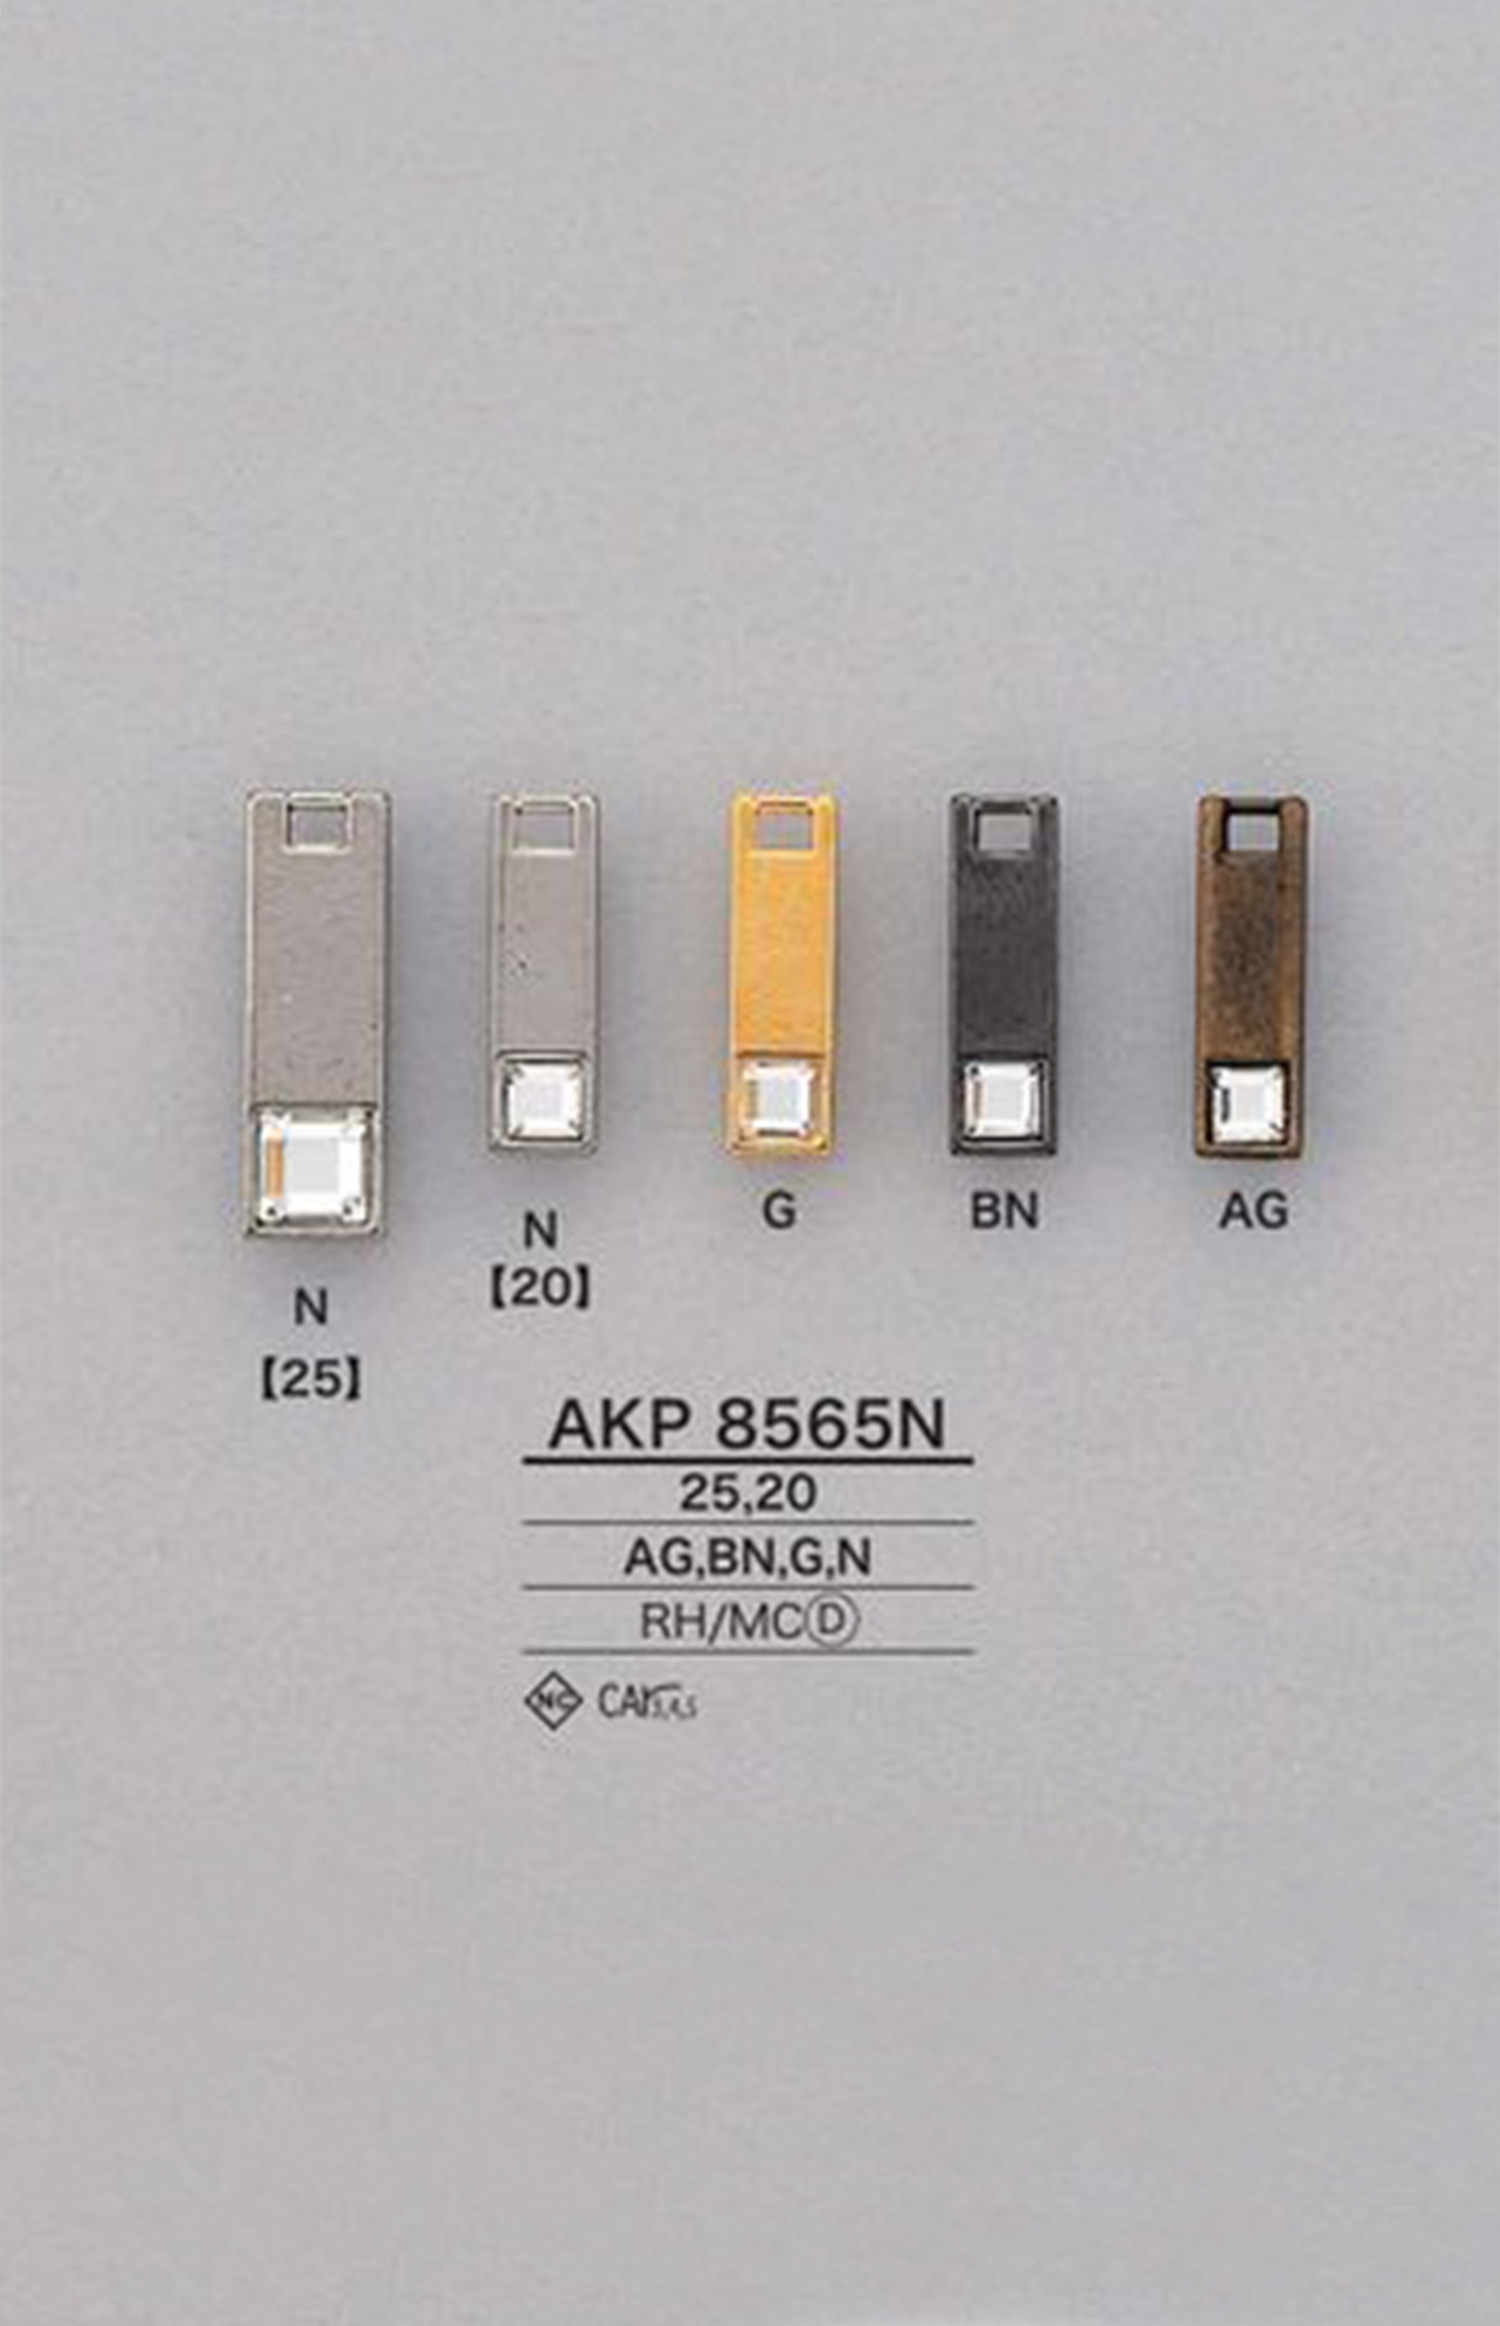 AKP8565N Strass-Quadrat-Reißverschlusspunkt (Zuglasche) IRIS